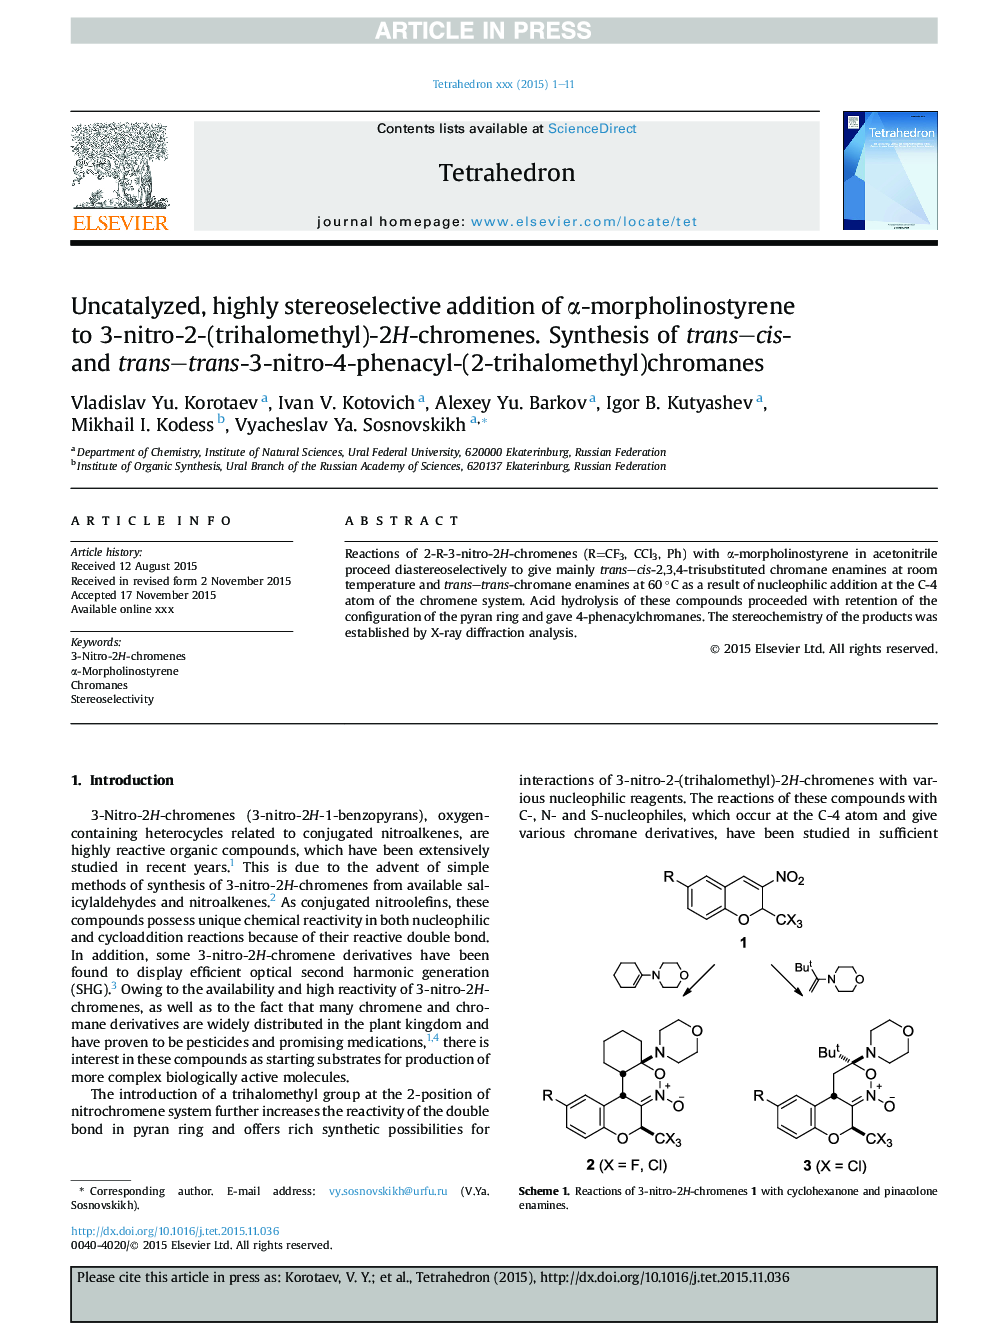 Uncatalyzed, highly stereoselective addition of Î±-morpholinostyrene to 3-nitro-2-(trihalomethyl)-2H-chromenes. Synthesis of trans-cis- and trans-trans-3-nitro-4-phenacyl-(2-trihalomethyl)chromanes